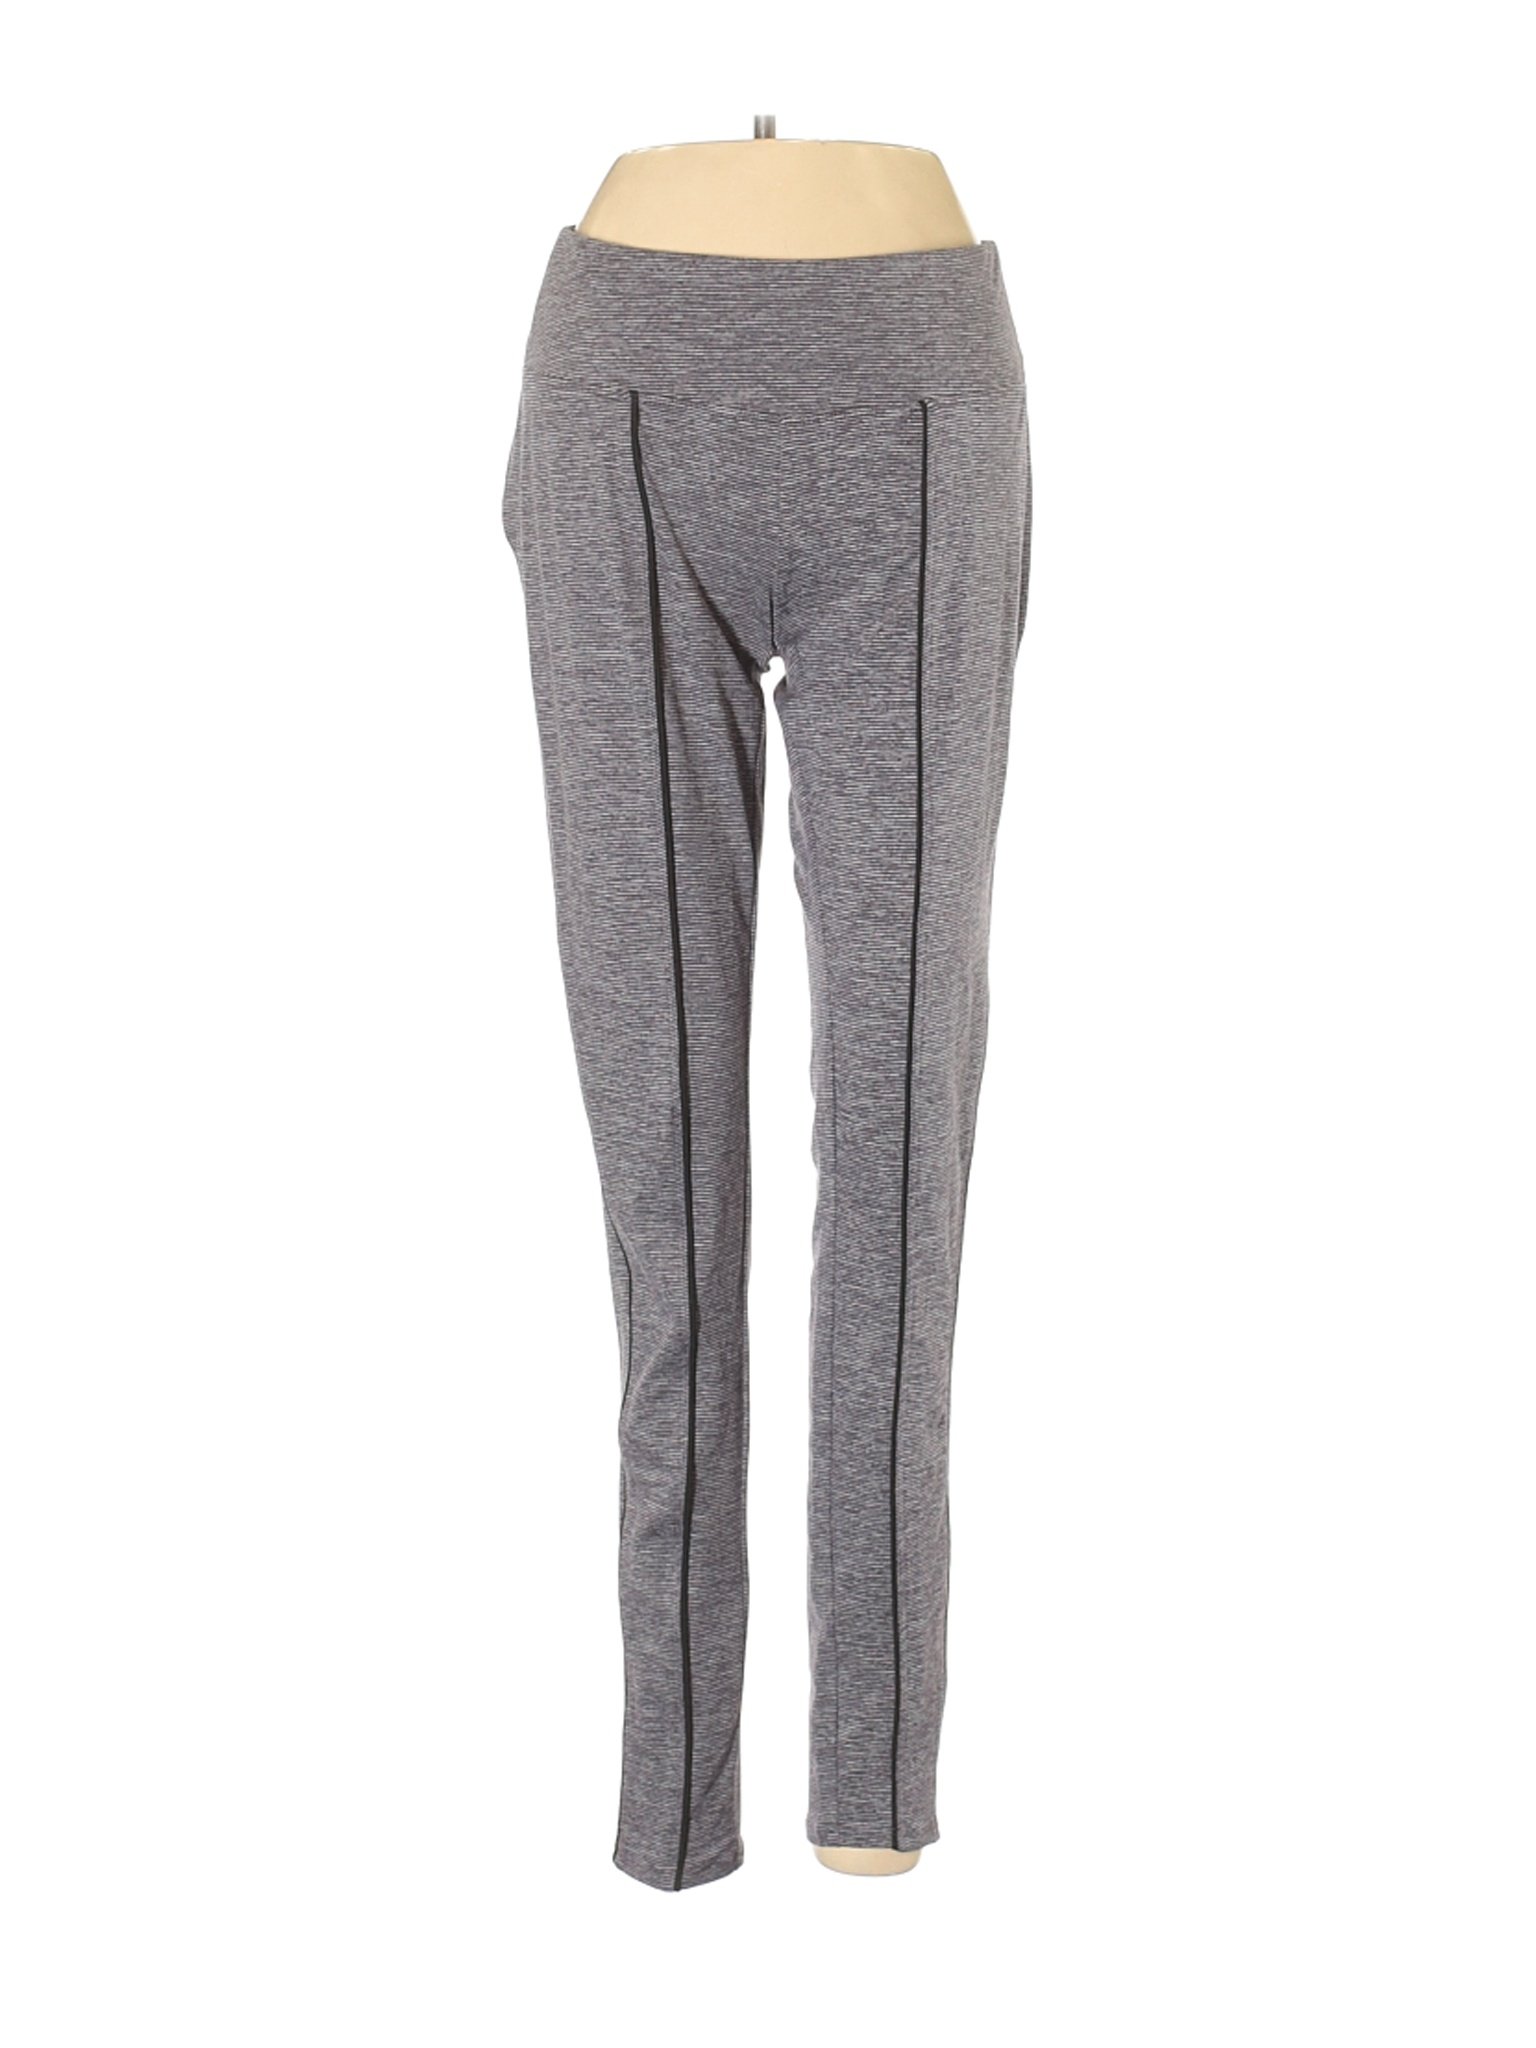 NWT Simply Vera Vera Wang Women Gray Active Pants XS | eBay